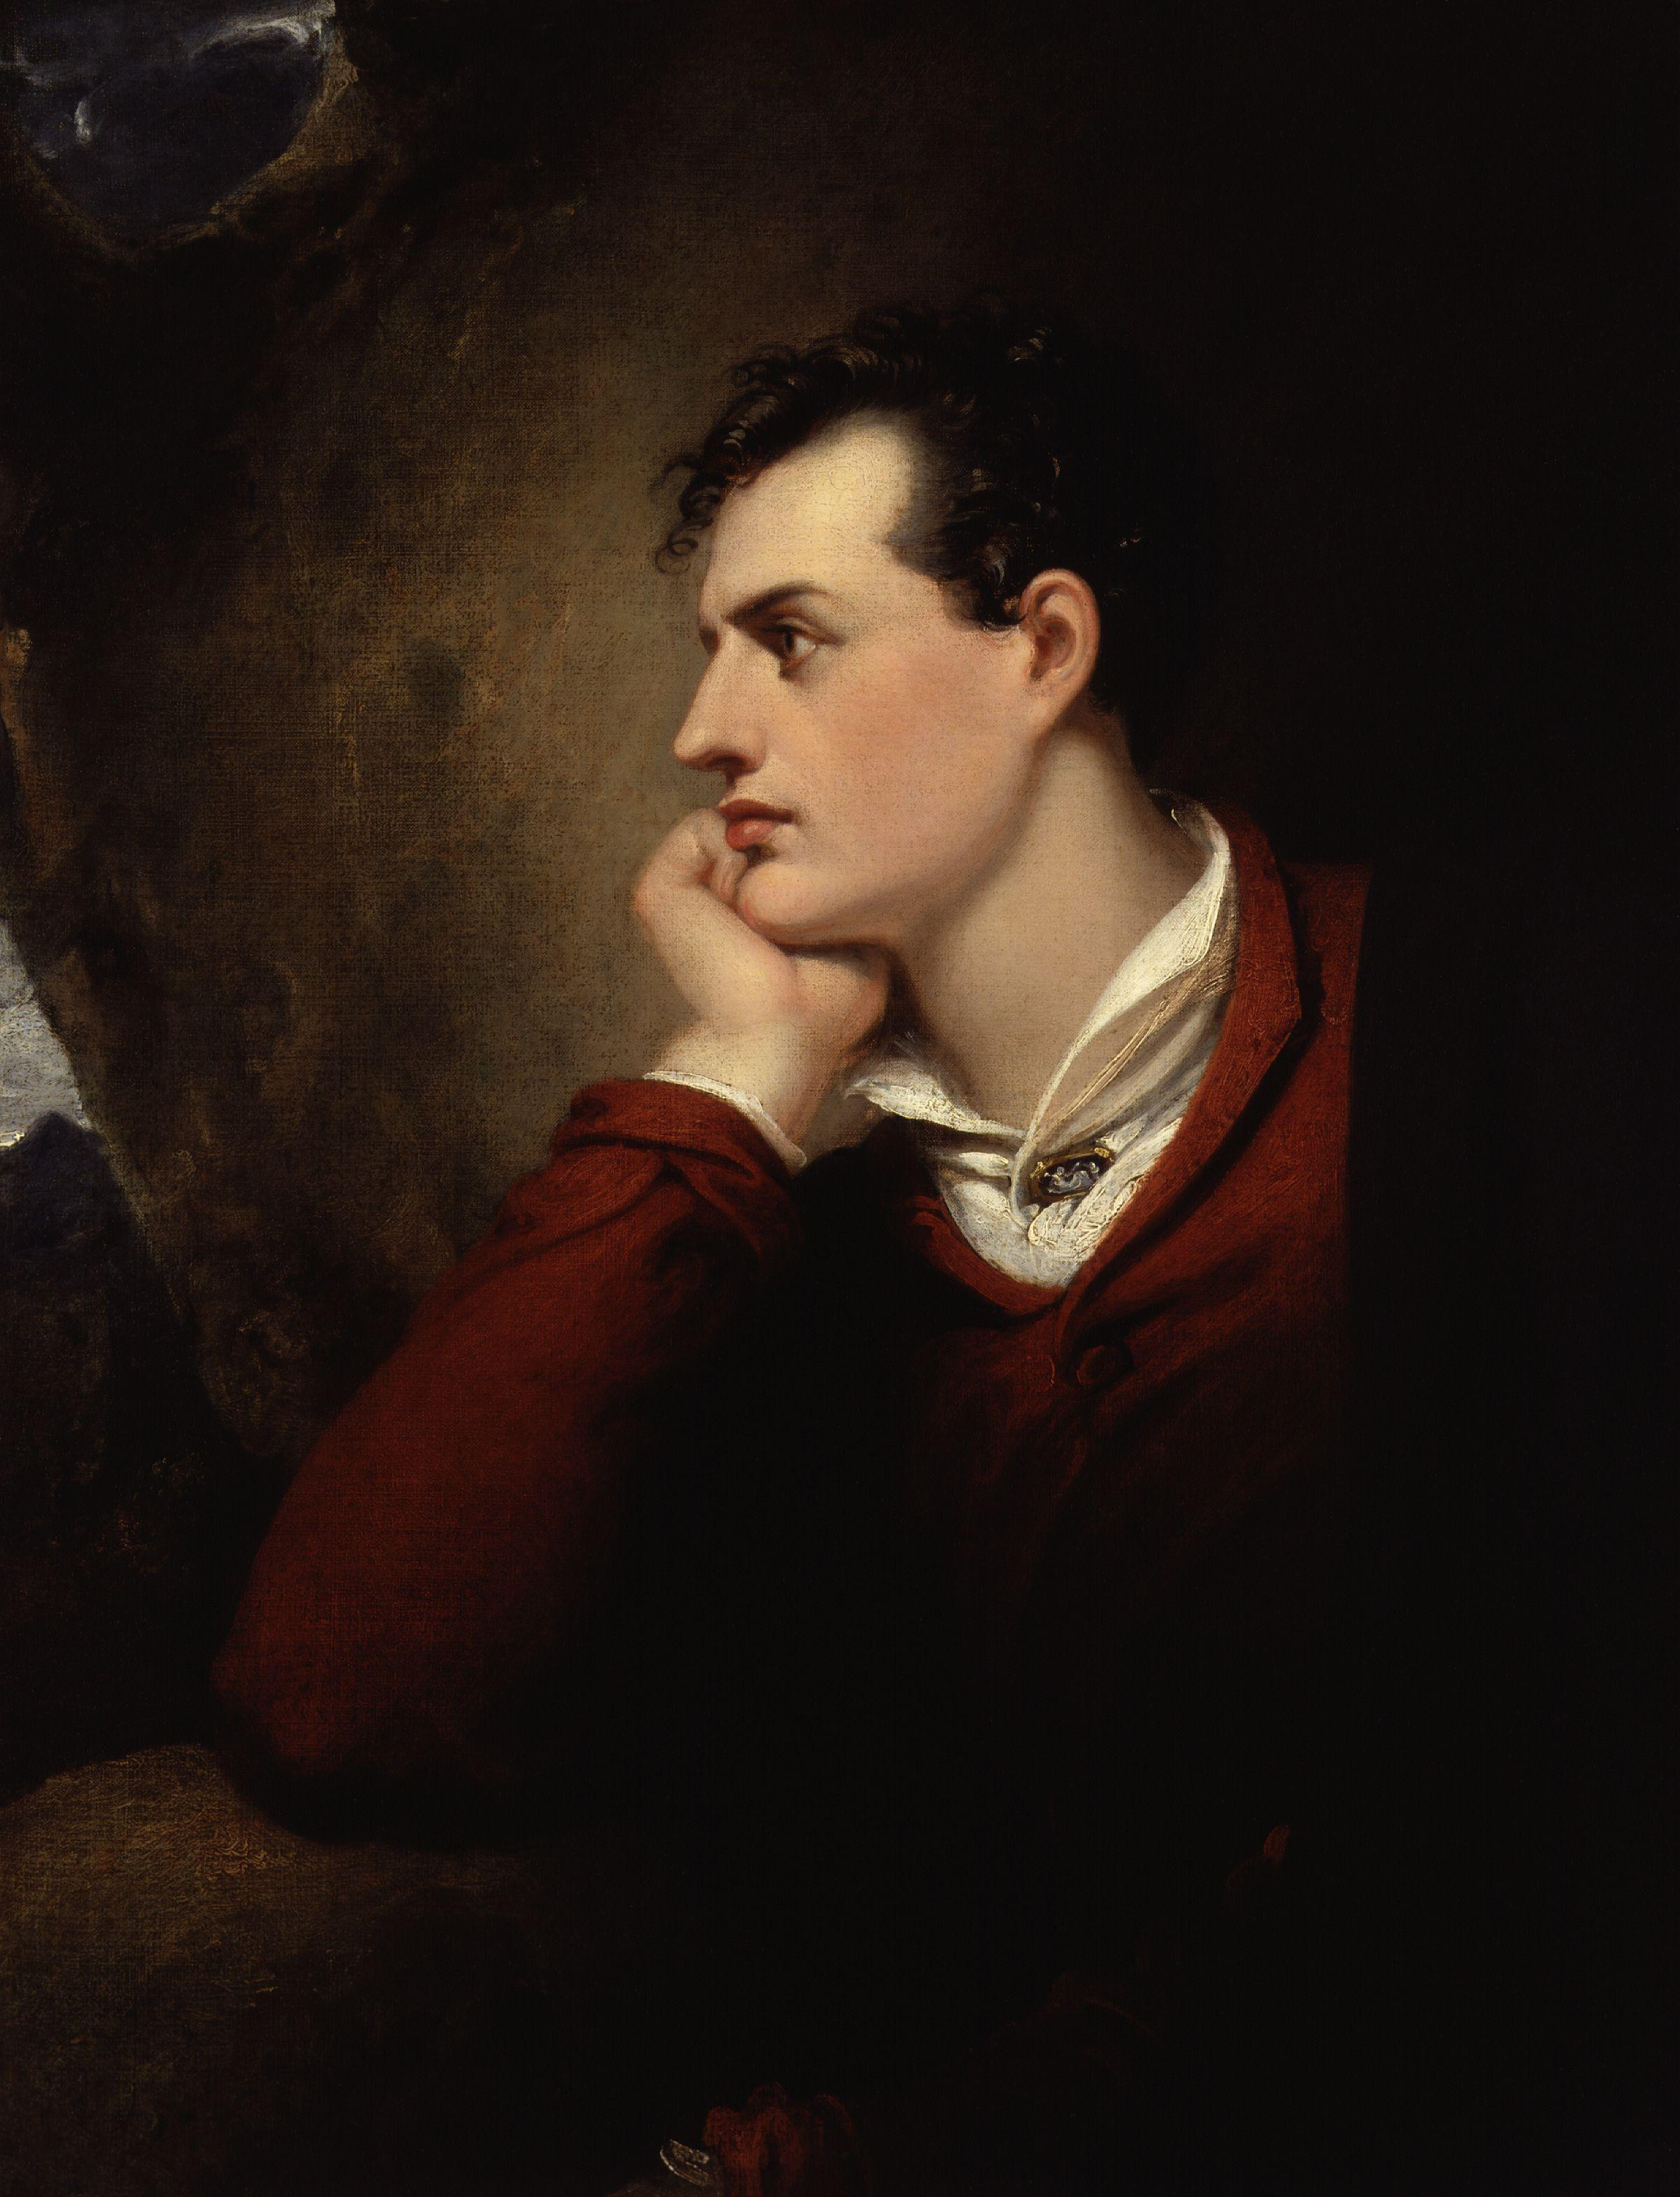 April 19 1824 - English Romantic Poet Lord Byron Dies